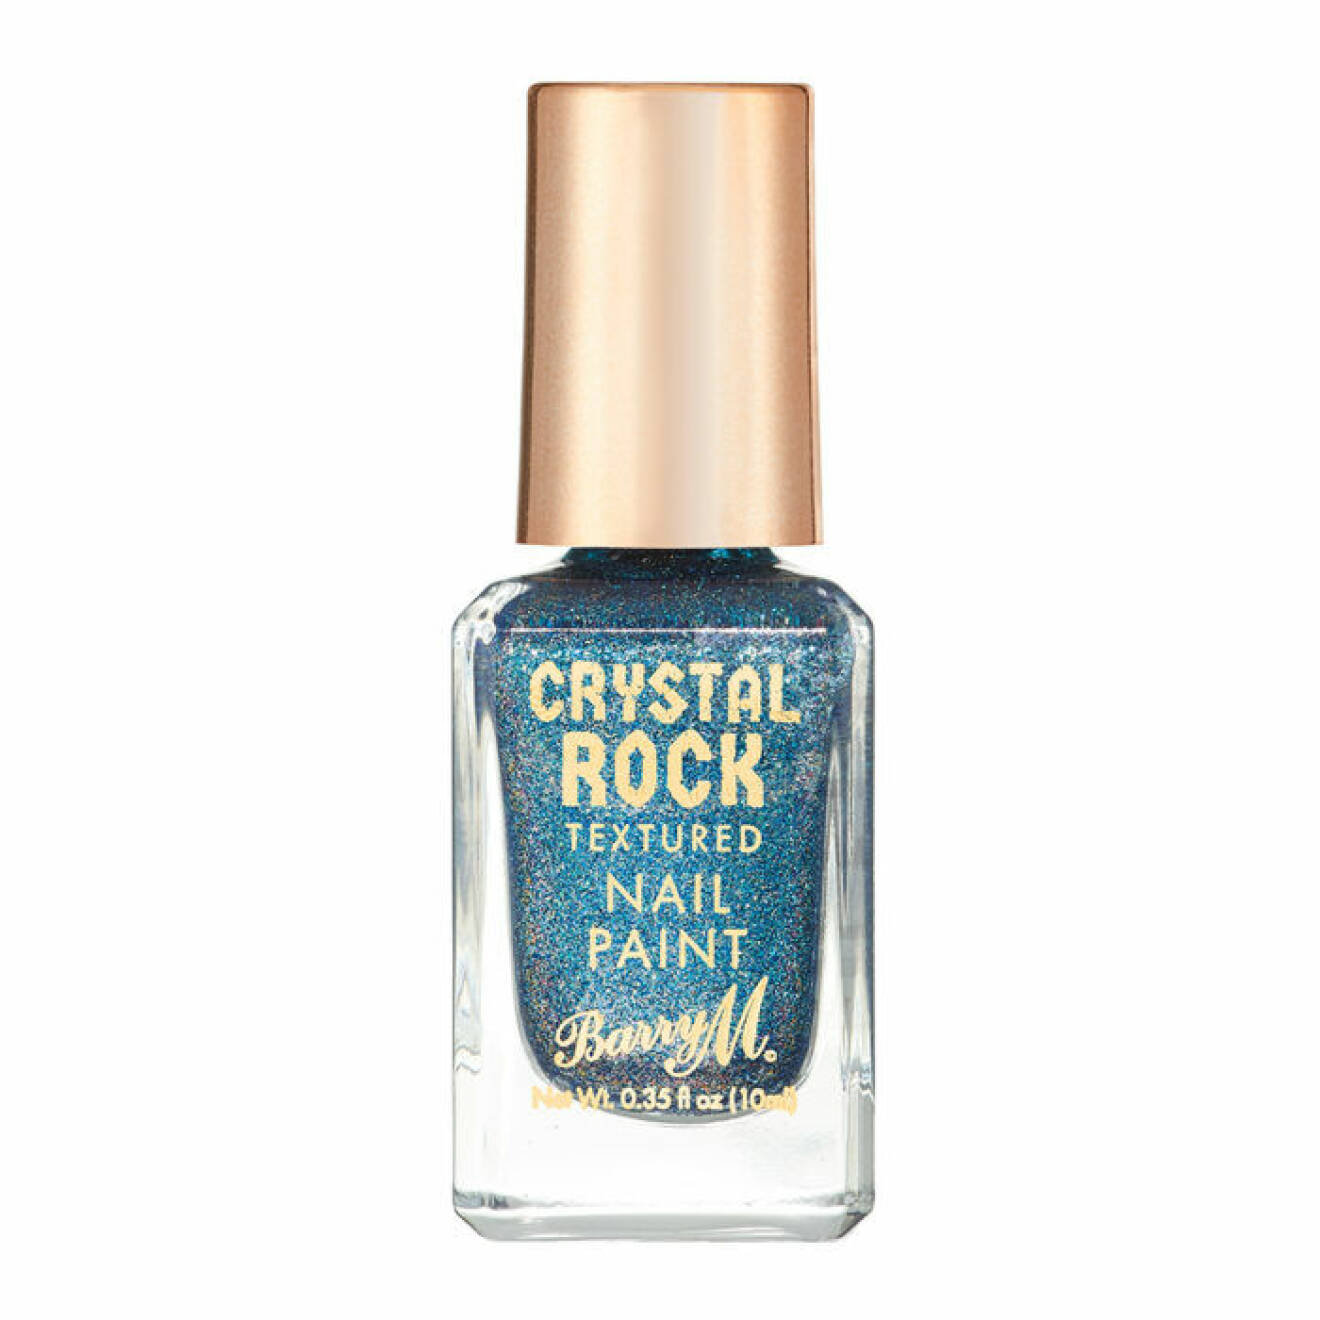 Crystal blåglittrigt nagellack